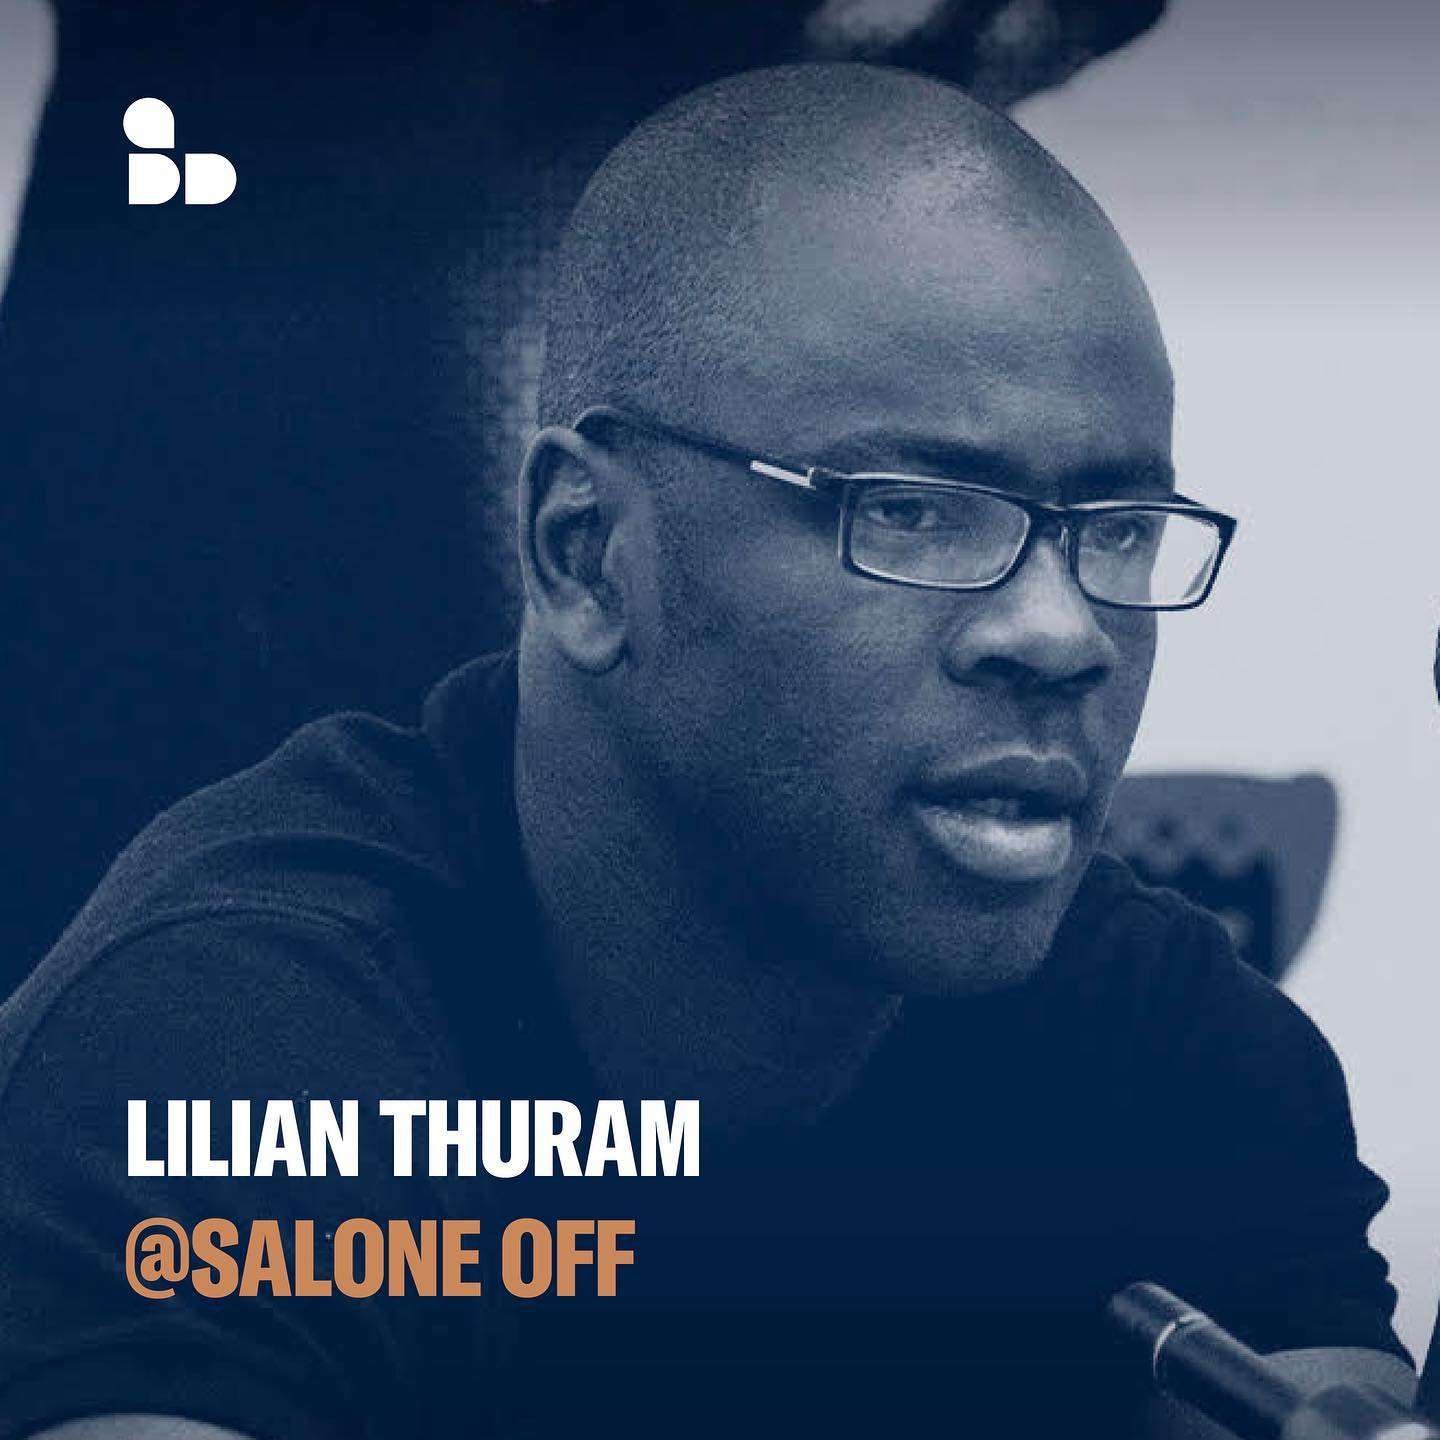 Doppio impegno torinese per lo scrittore ed ex-calciatore Lilian Thuram